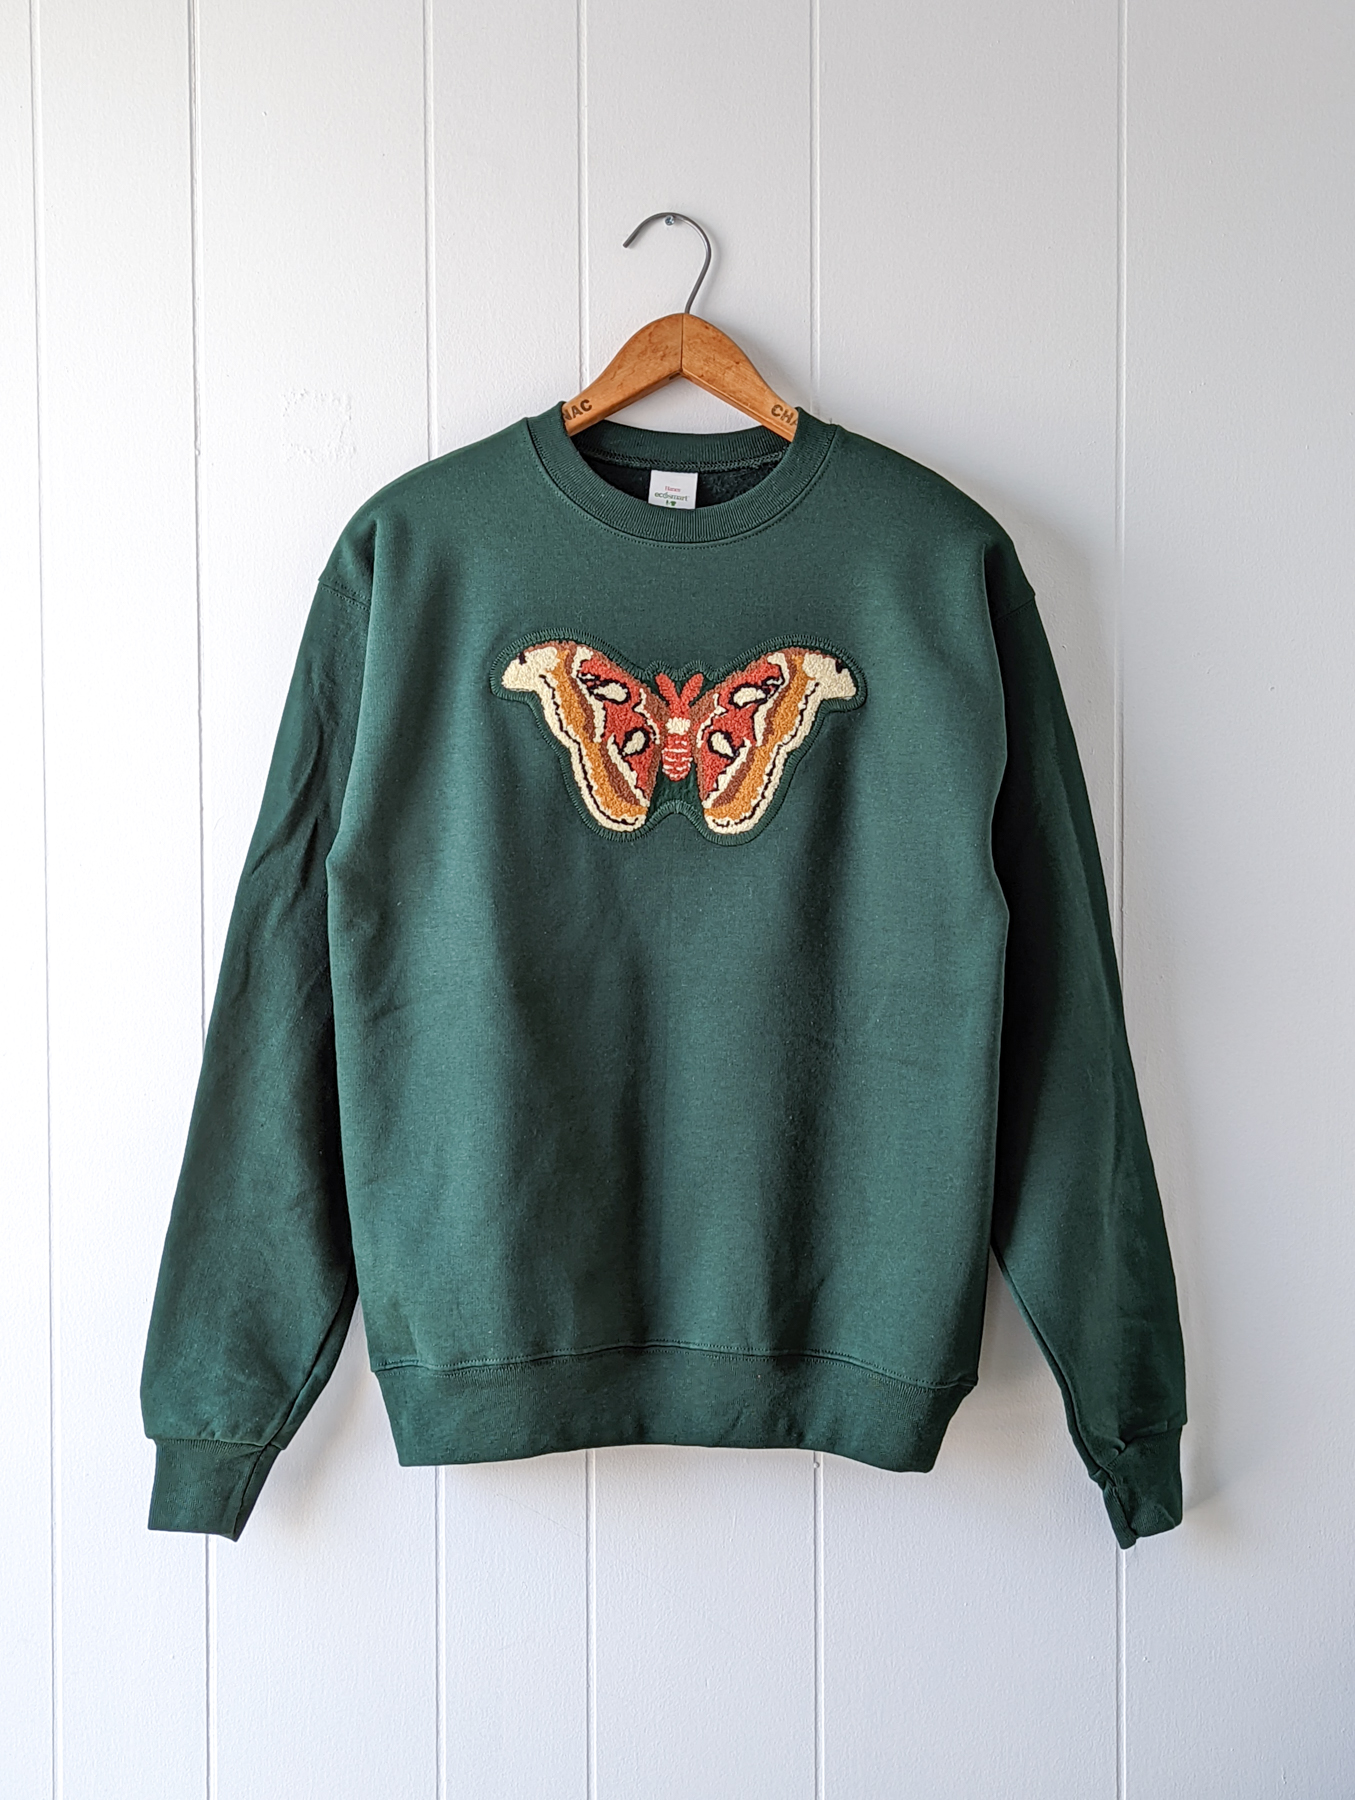 Chenille Atlas Moth Sweatshirt - Crewel and Unusual